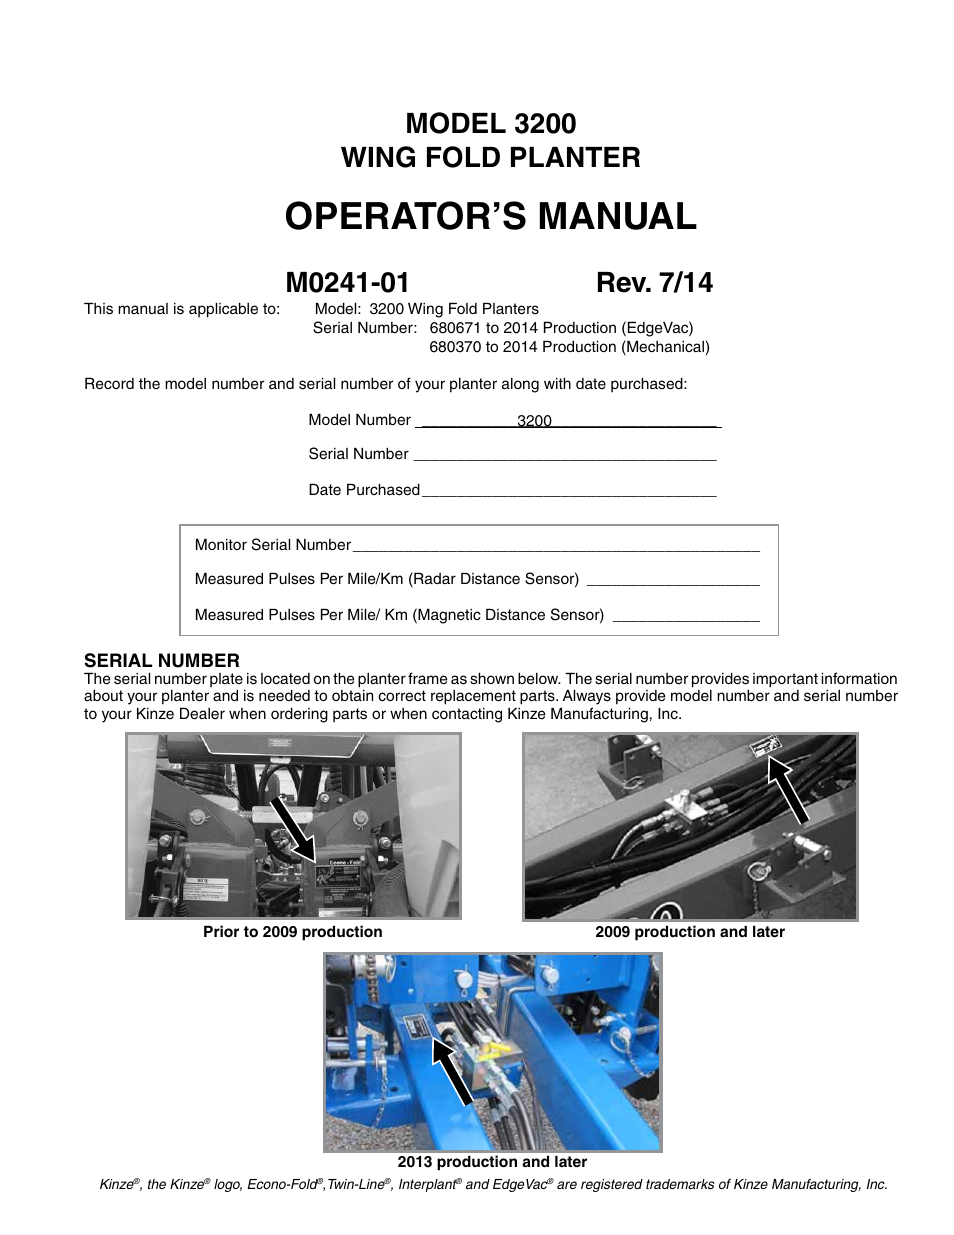 Operator’s manual, Model 3200 wing fold planter | Kinze 3200 Wing-Fold Planter Rev. 7/14 User Manual | Page 3 / 192